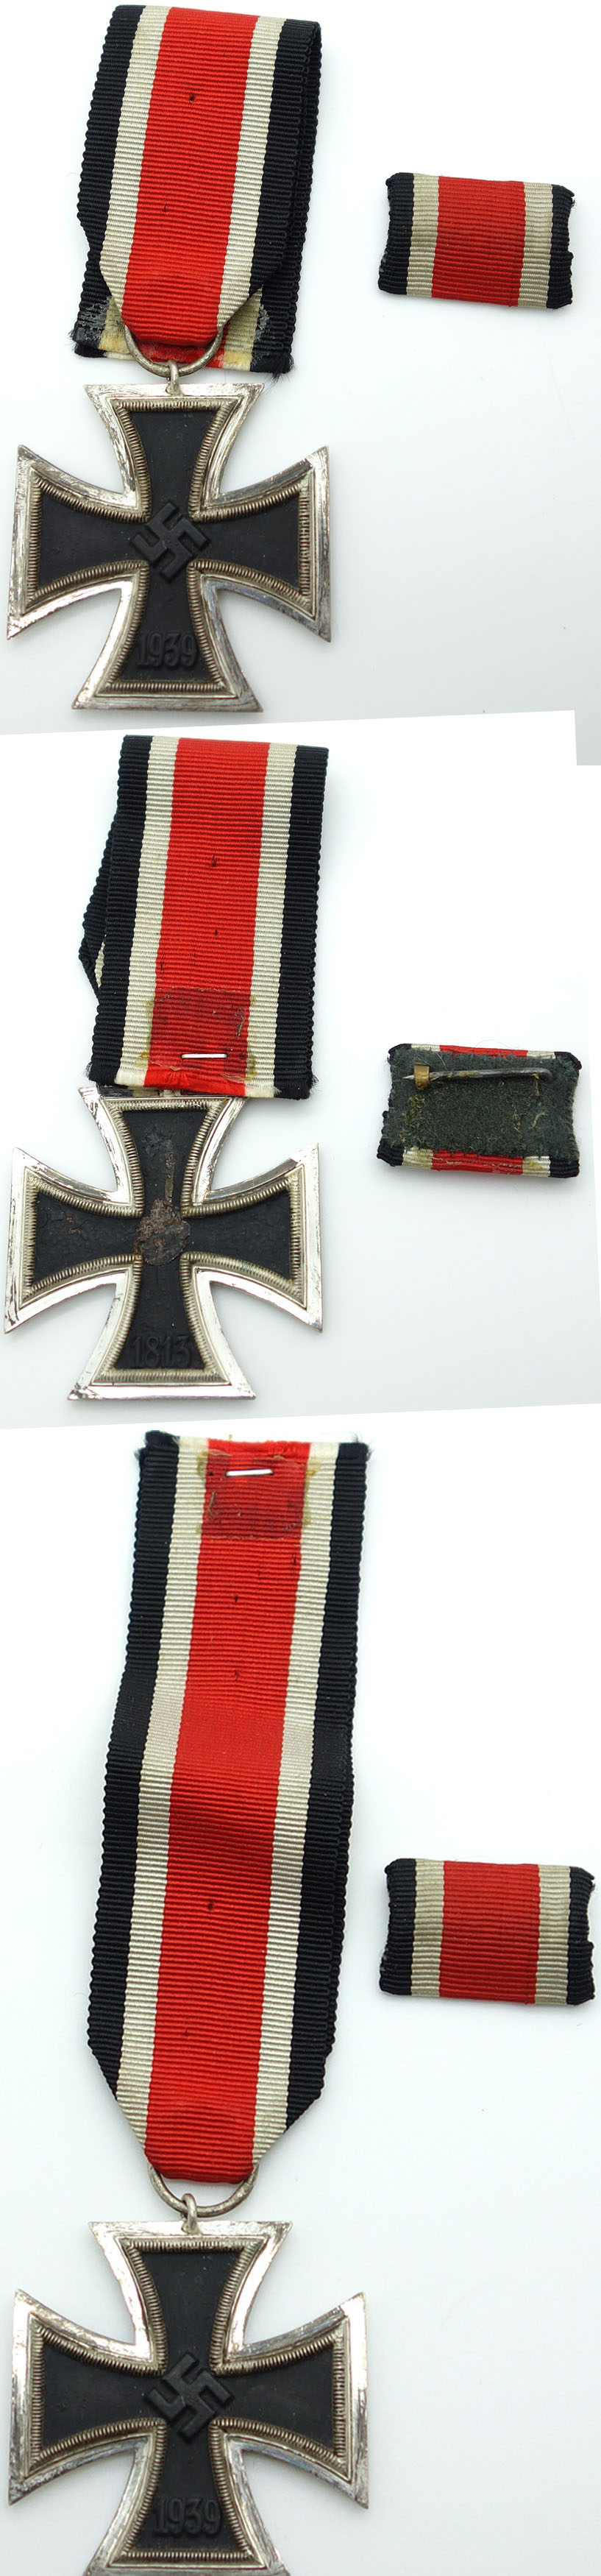 Iron Cross 2nd Class with Ribbon Bar